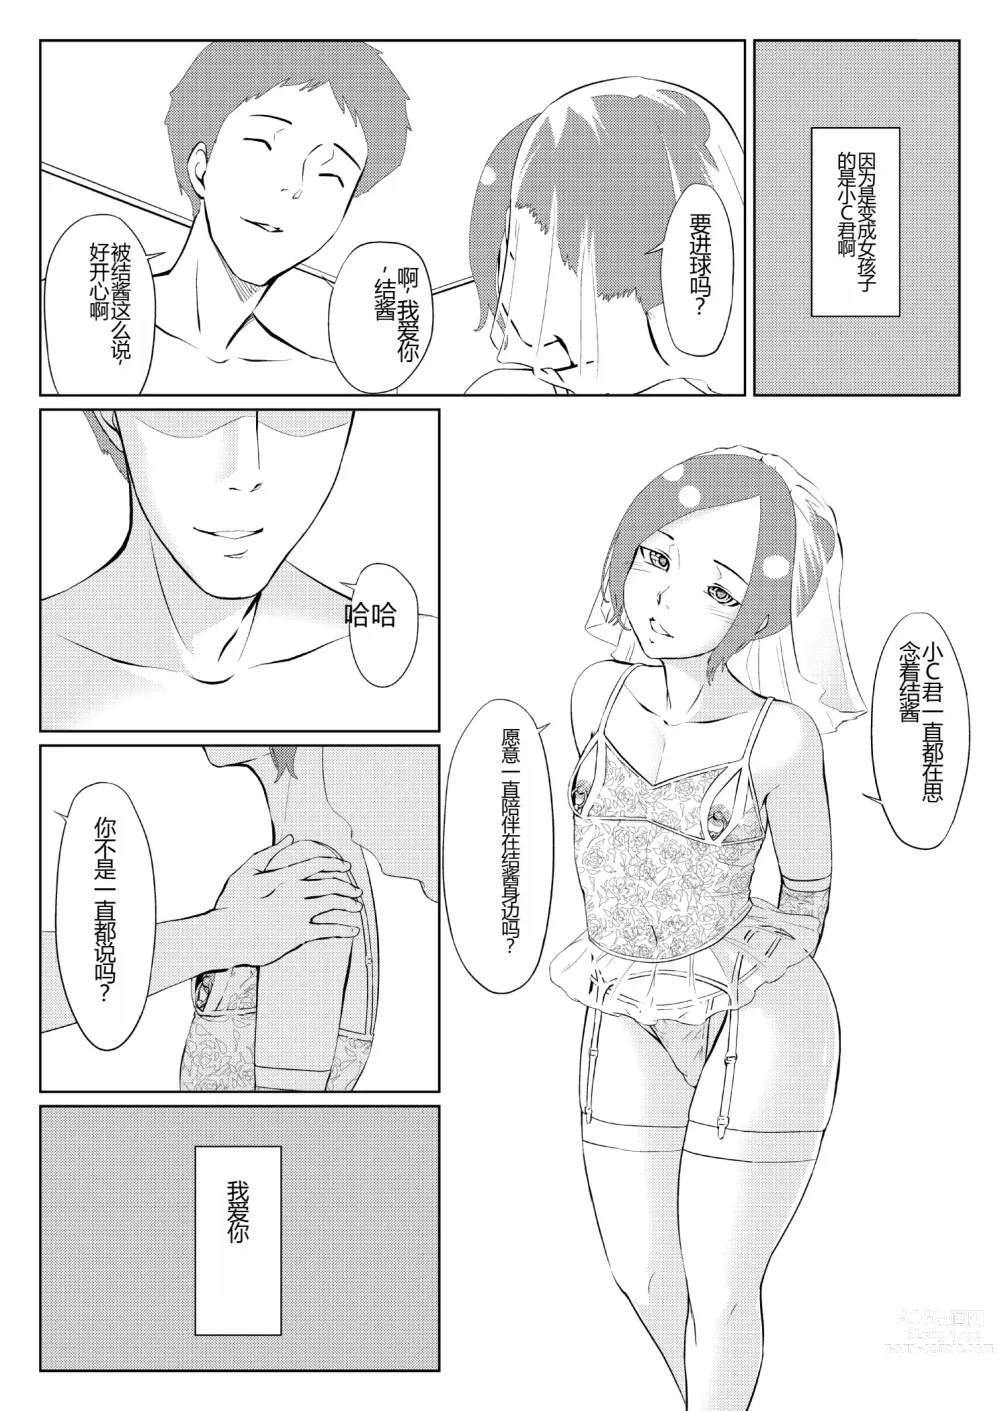 Page 2 of doujinshi Agitated Man